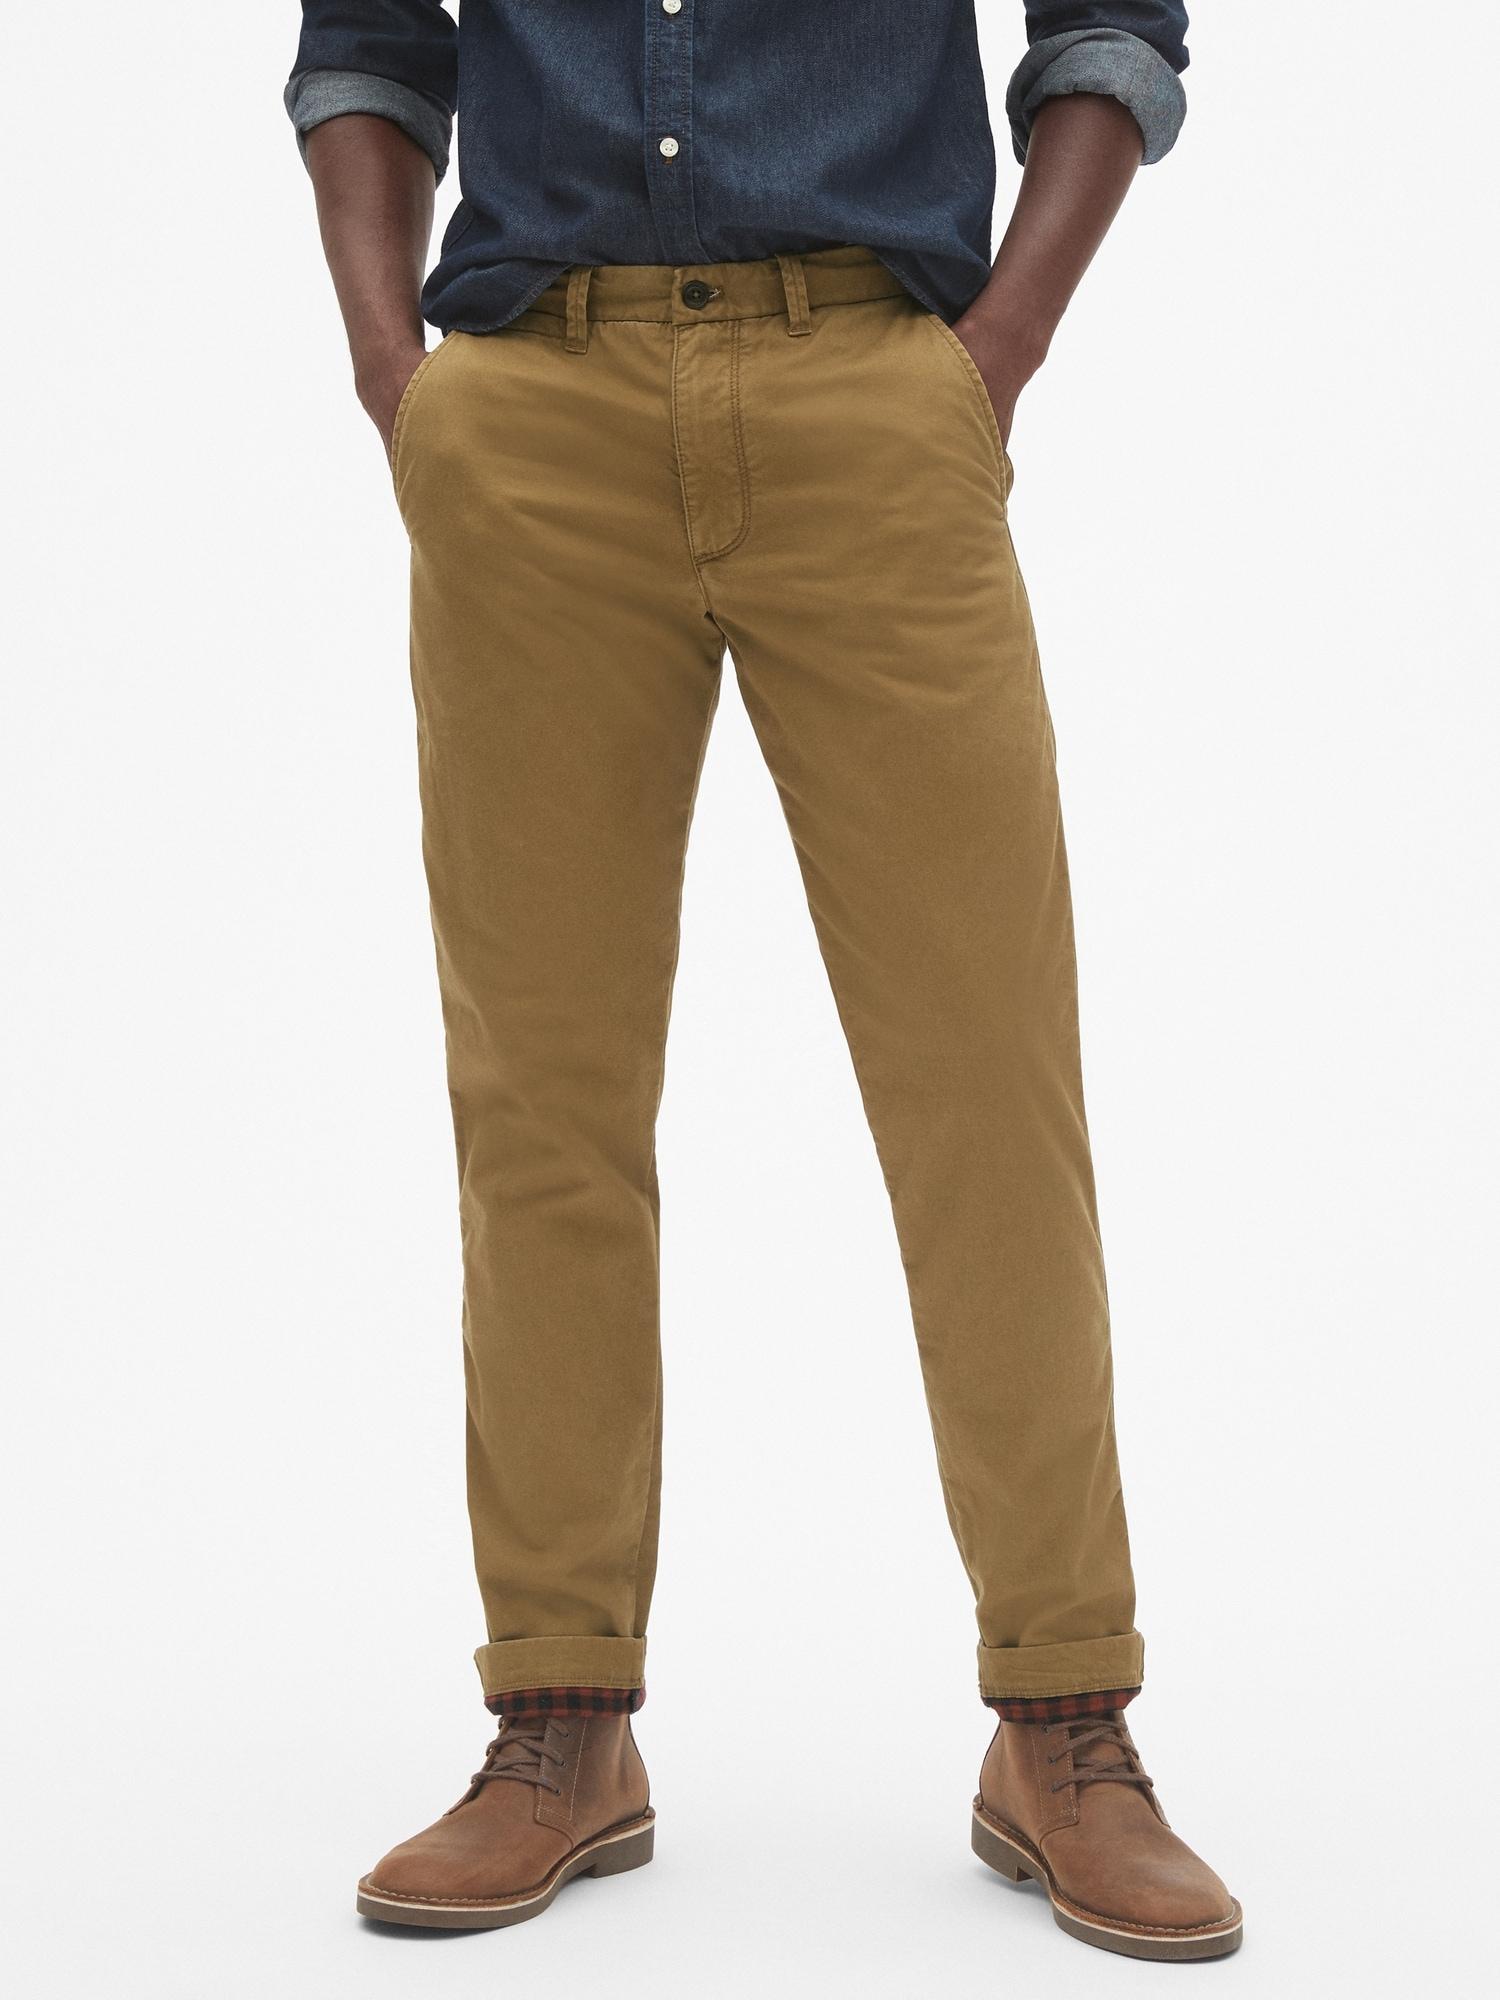 Gap Khakis In Slim Fit Flex in Brown for Men -